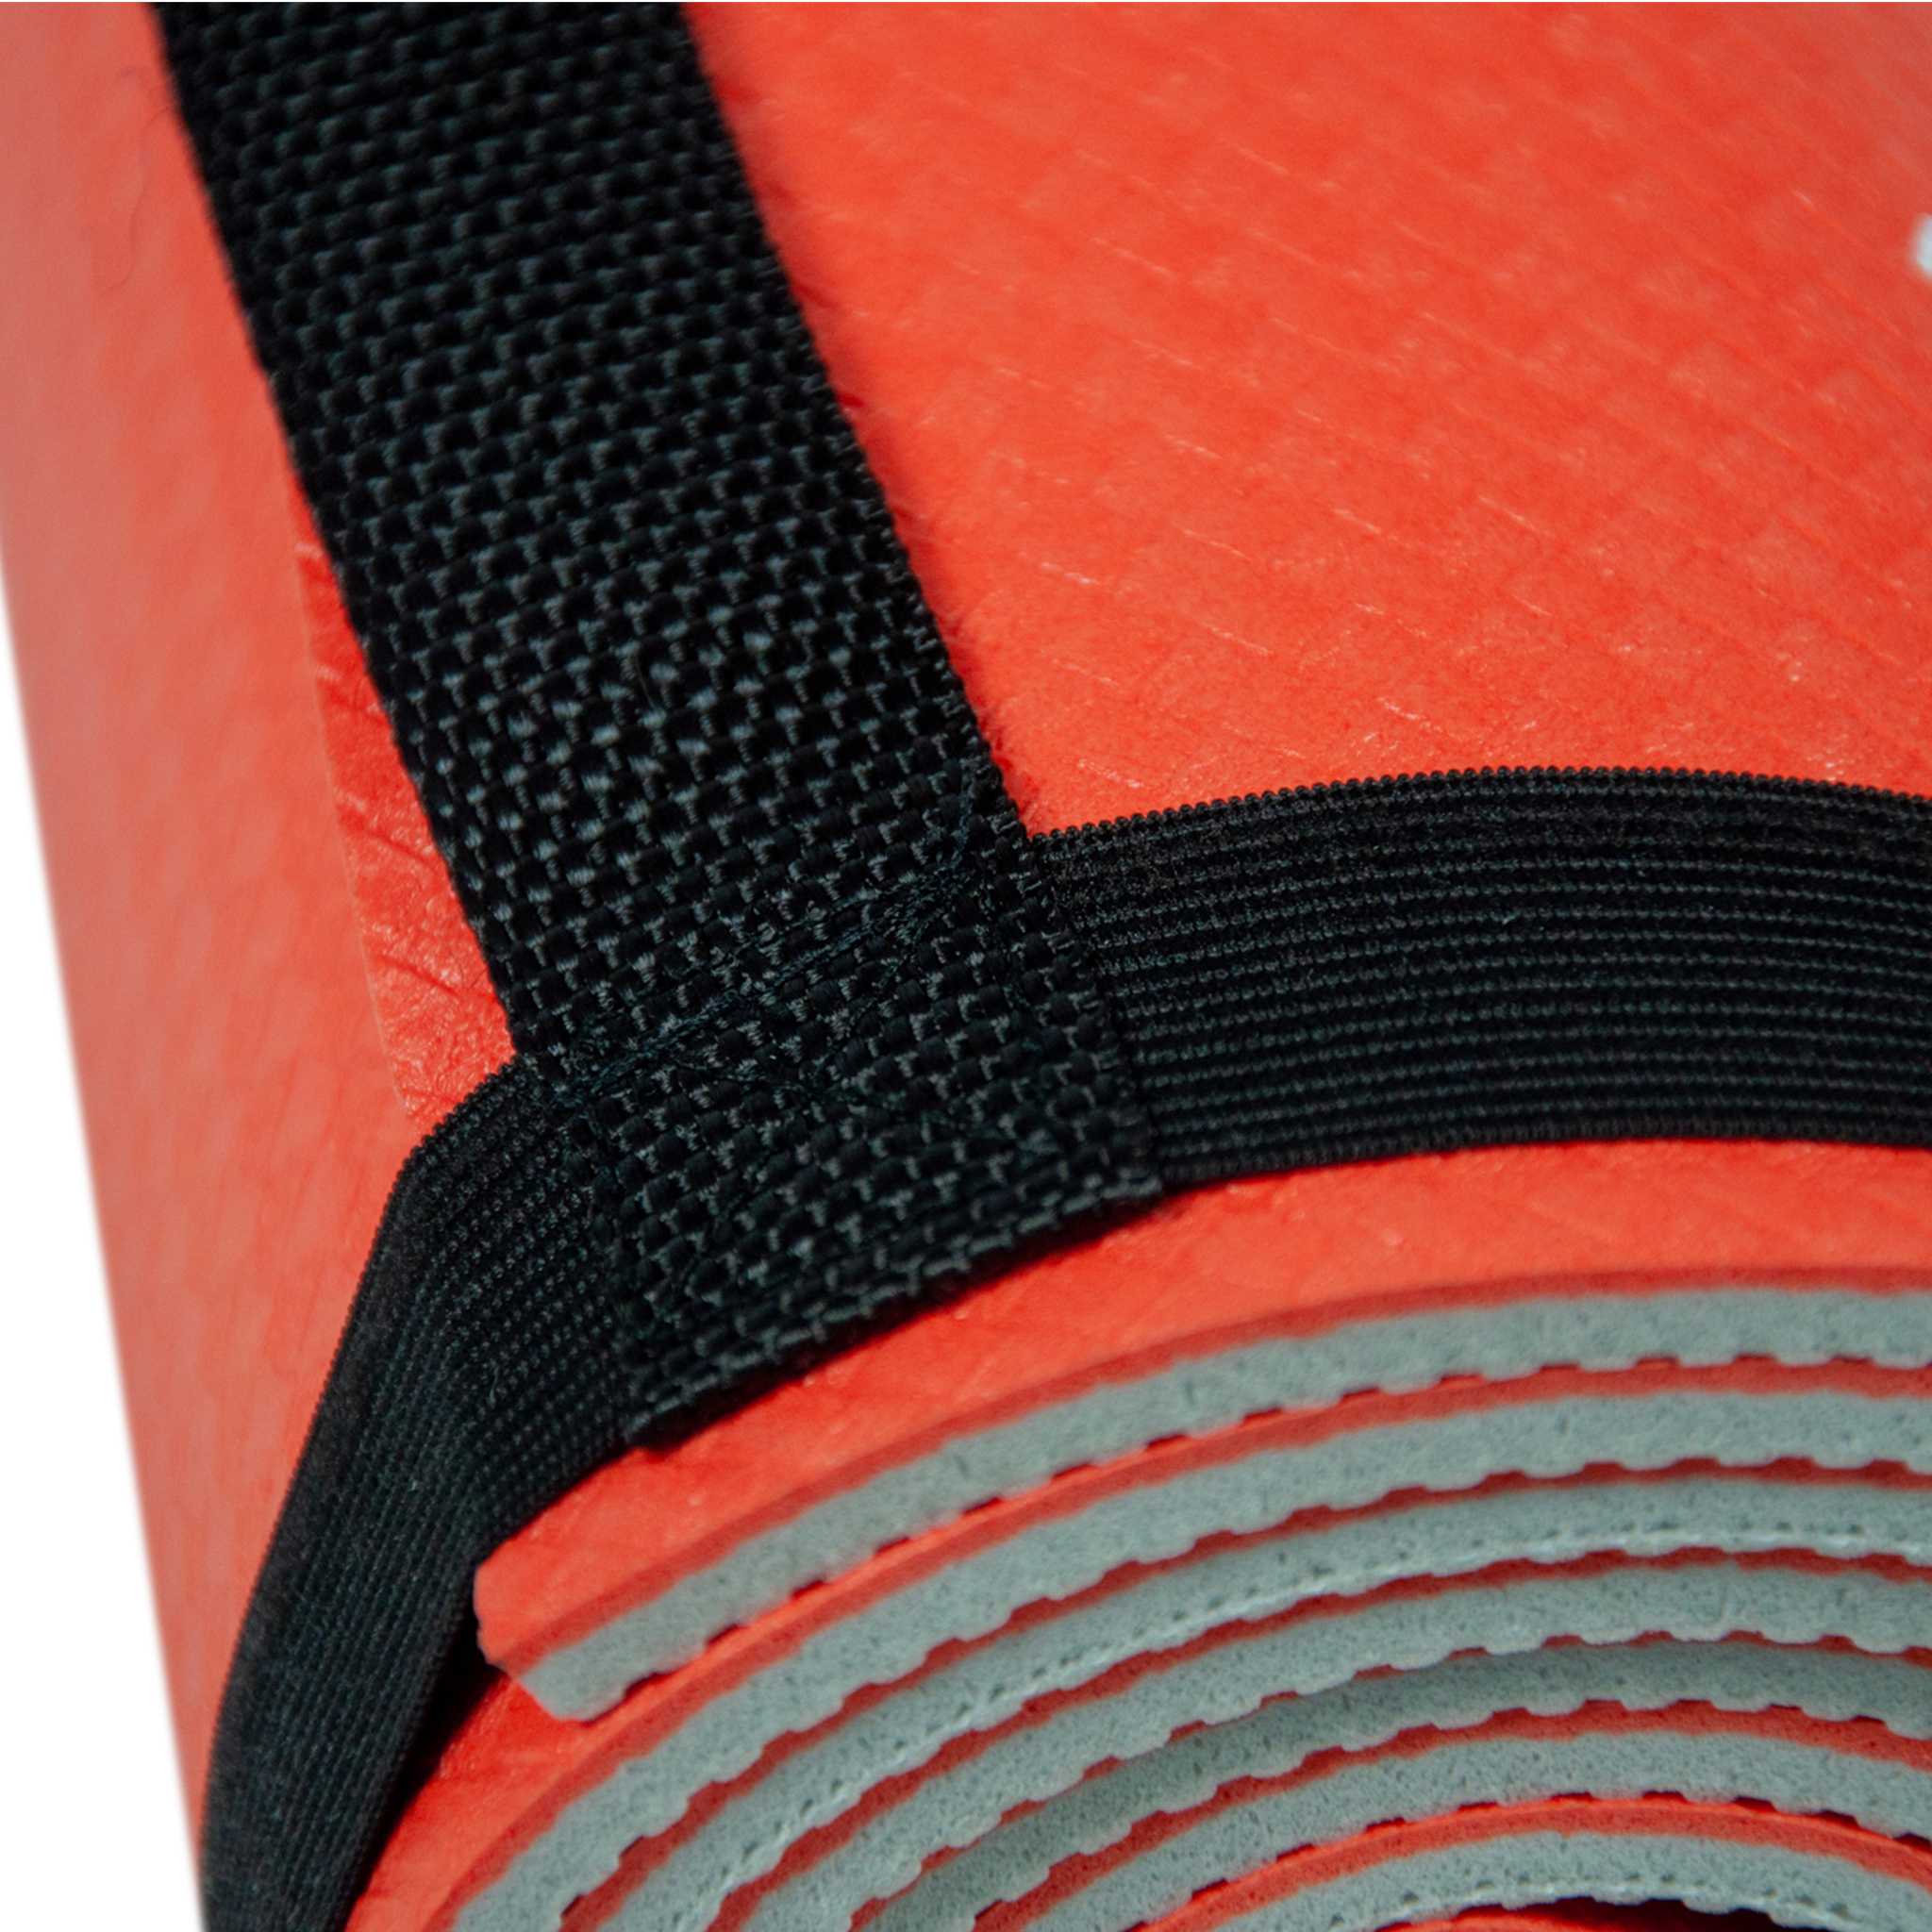 Extra-Thick Premium Yoga Mat, 6 mm, Dual-Textured